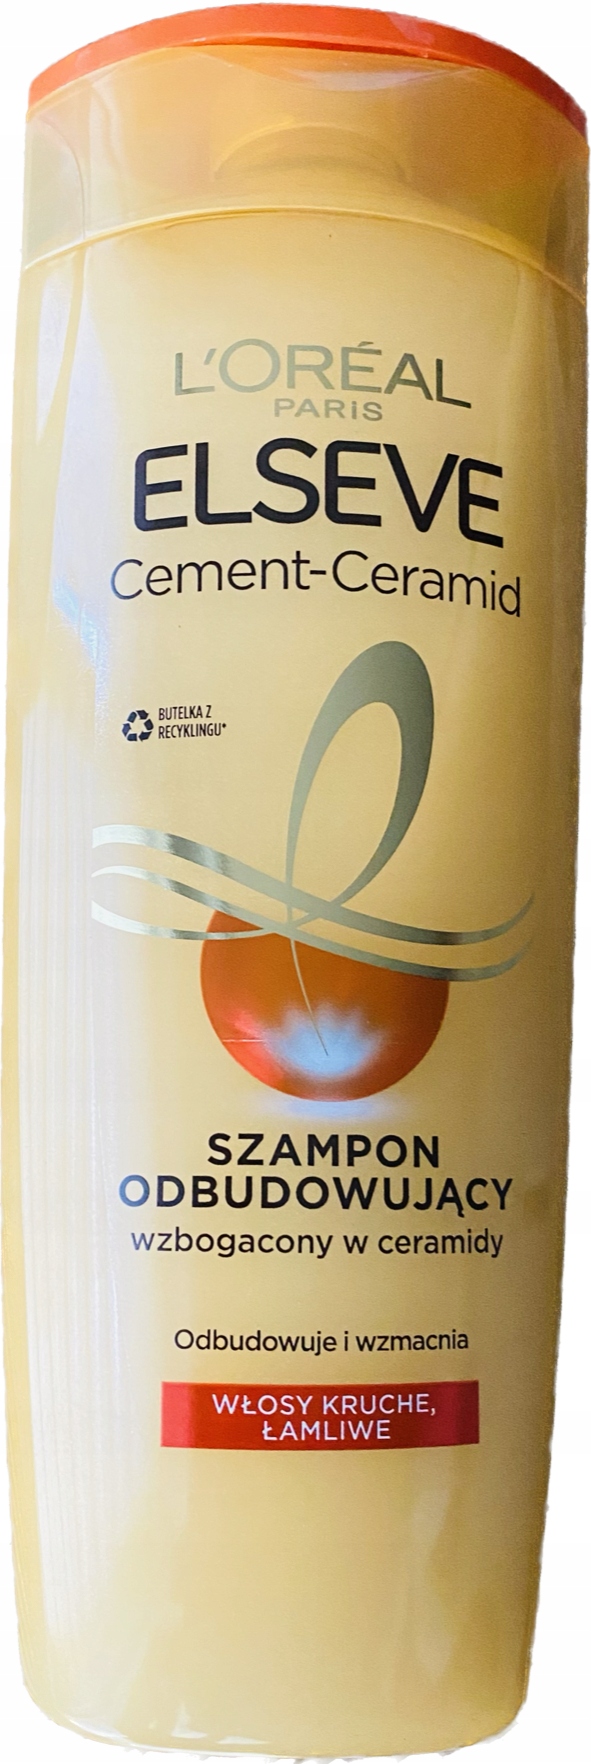 szampon loreal elseve cement ceramid